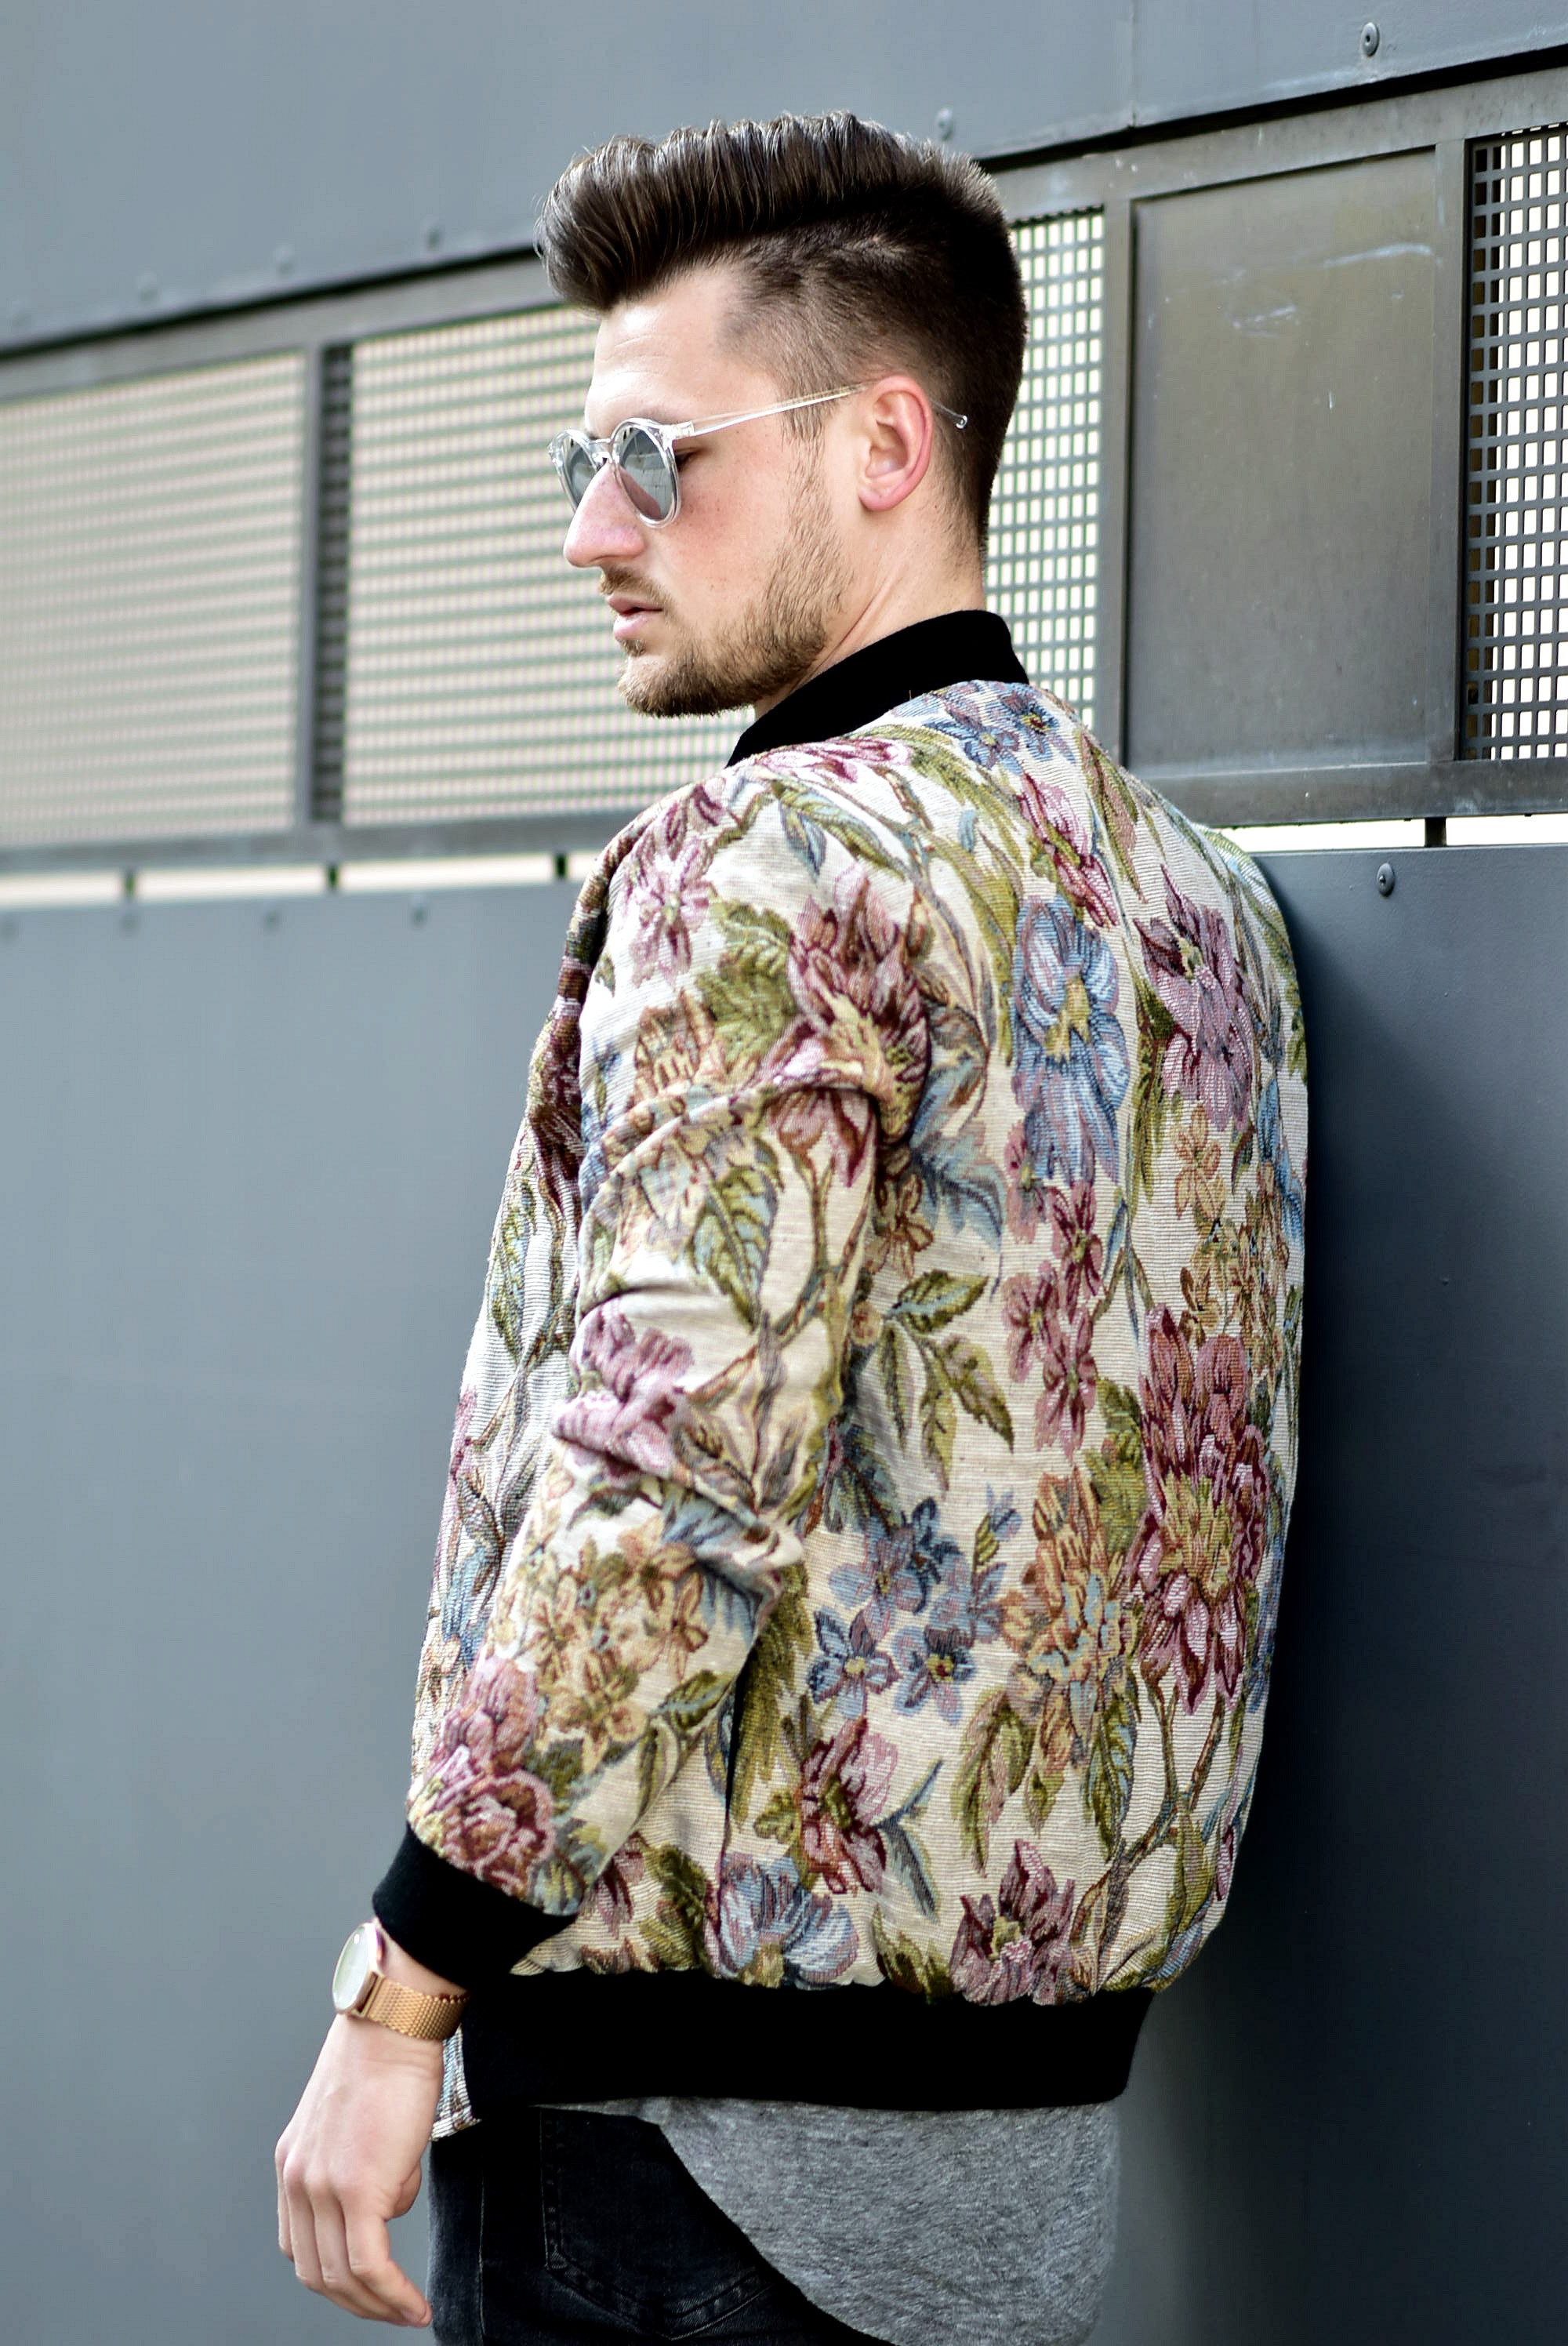 Tommeezjerry-Styleblog-Männerblog-Männer-Modeblog-Berlin-Berlinblog-Outfit-Streetlook-Bomberjacke-Vintage-Graues-Shirt-Skinny-Jeans-Sonnenbrille-Vintagelook